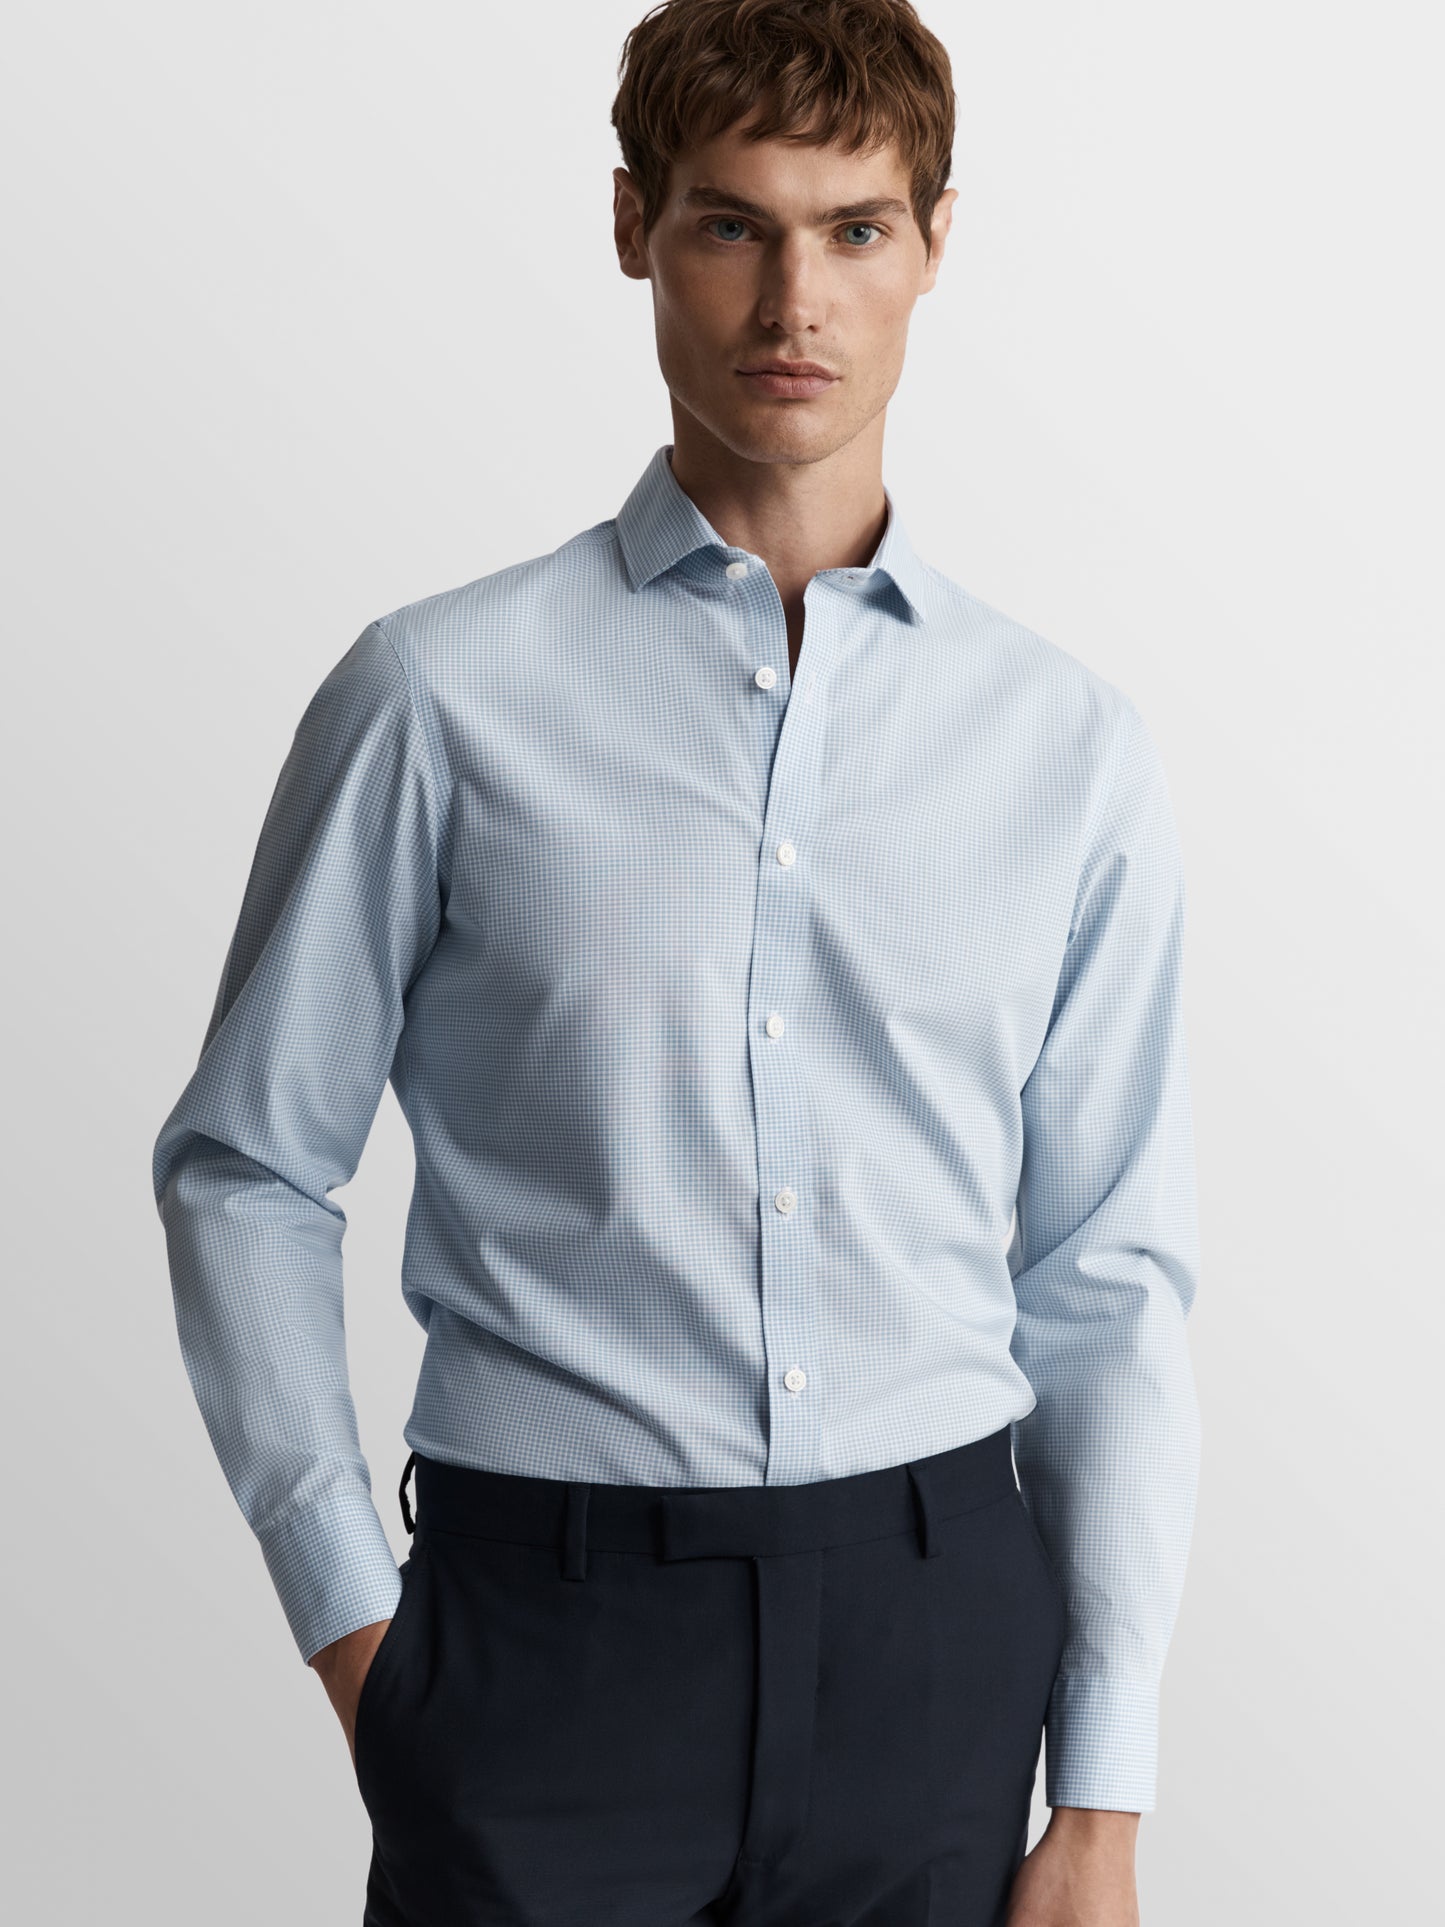 Image 2 of Non-Iron Blue Mini Check Plain Weave Fitted Single Cuff Classic Collar Shirt